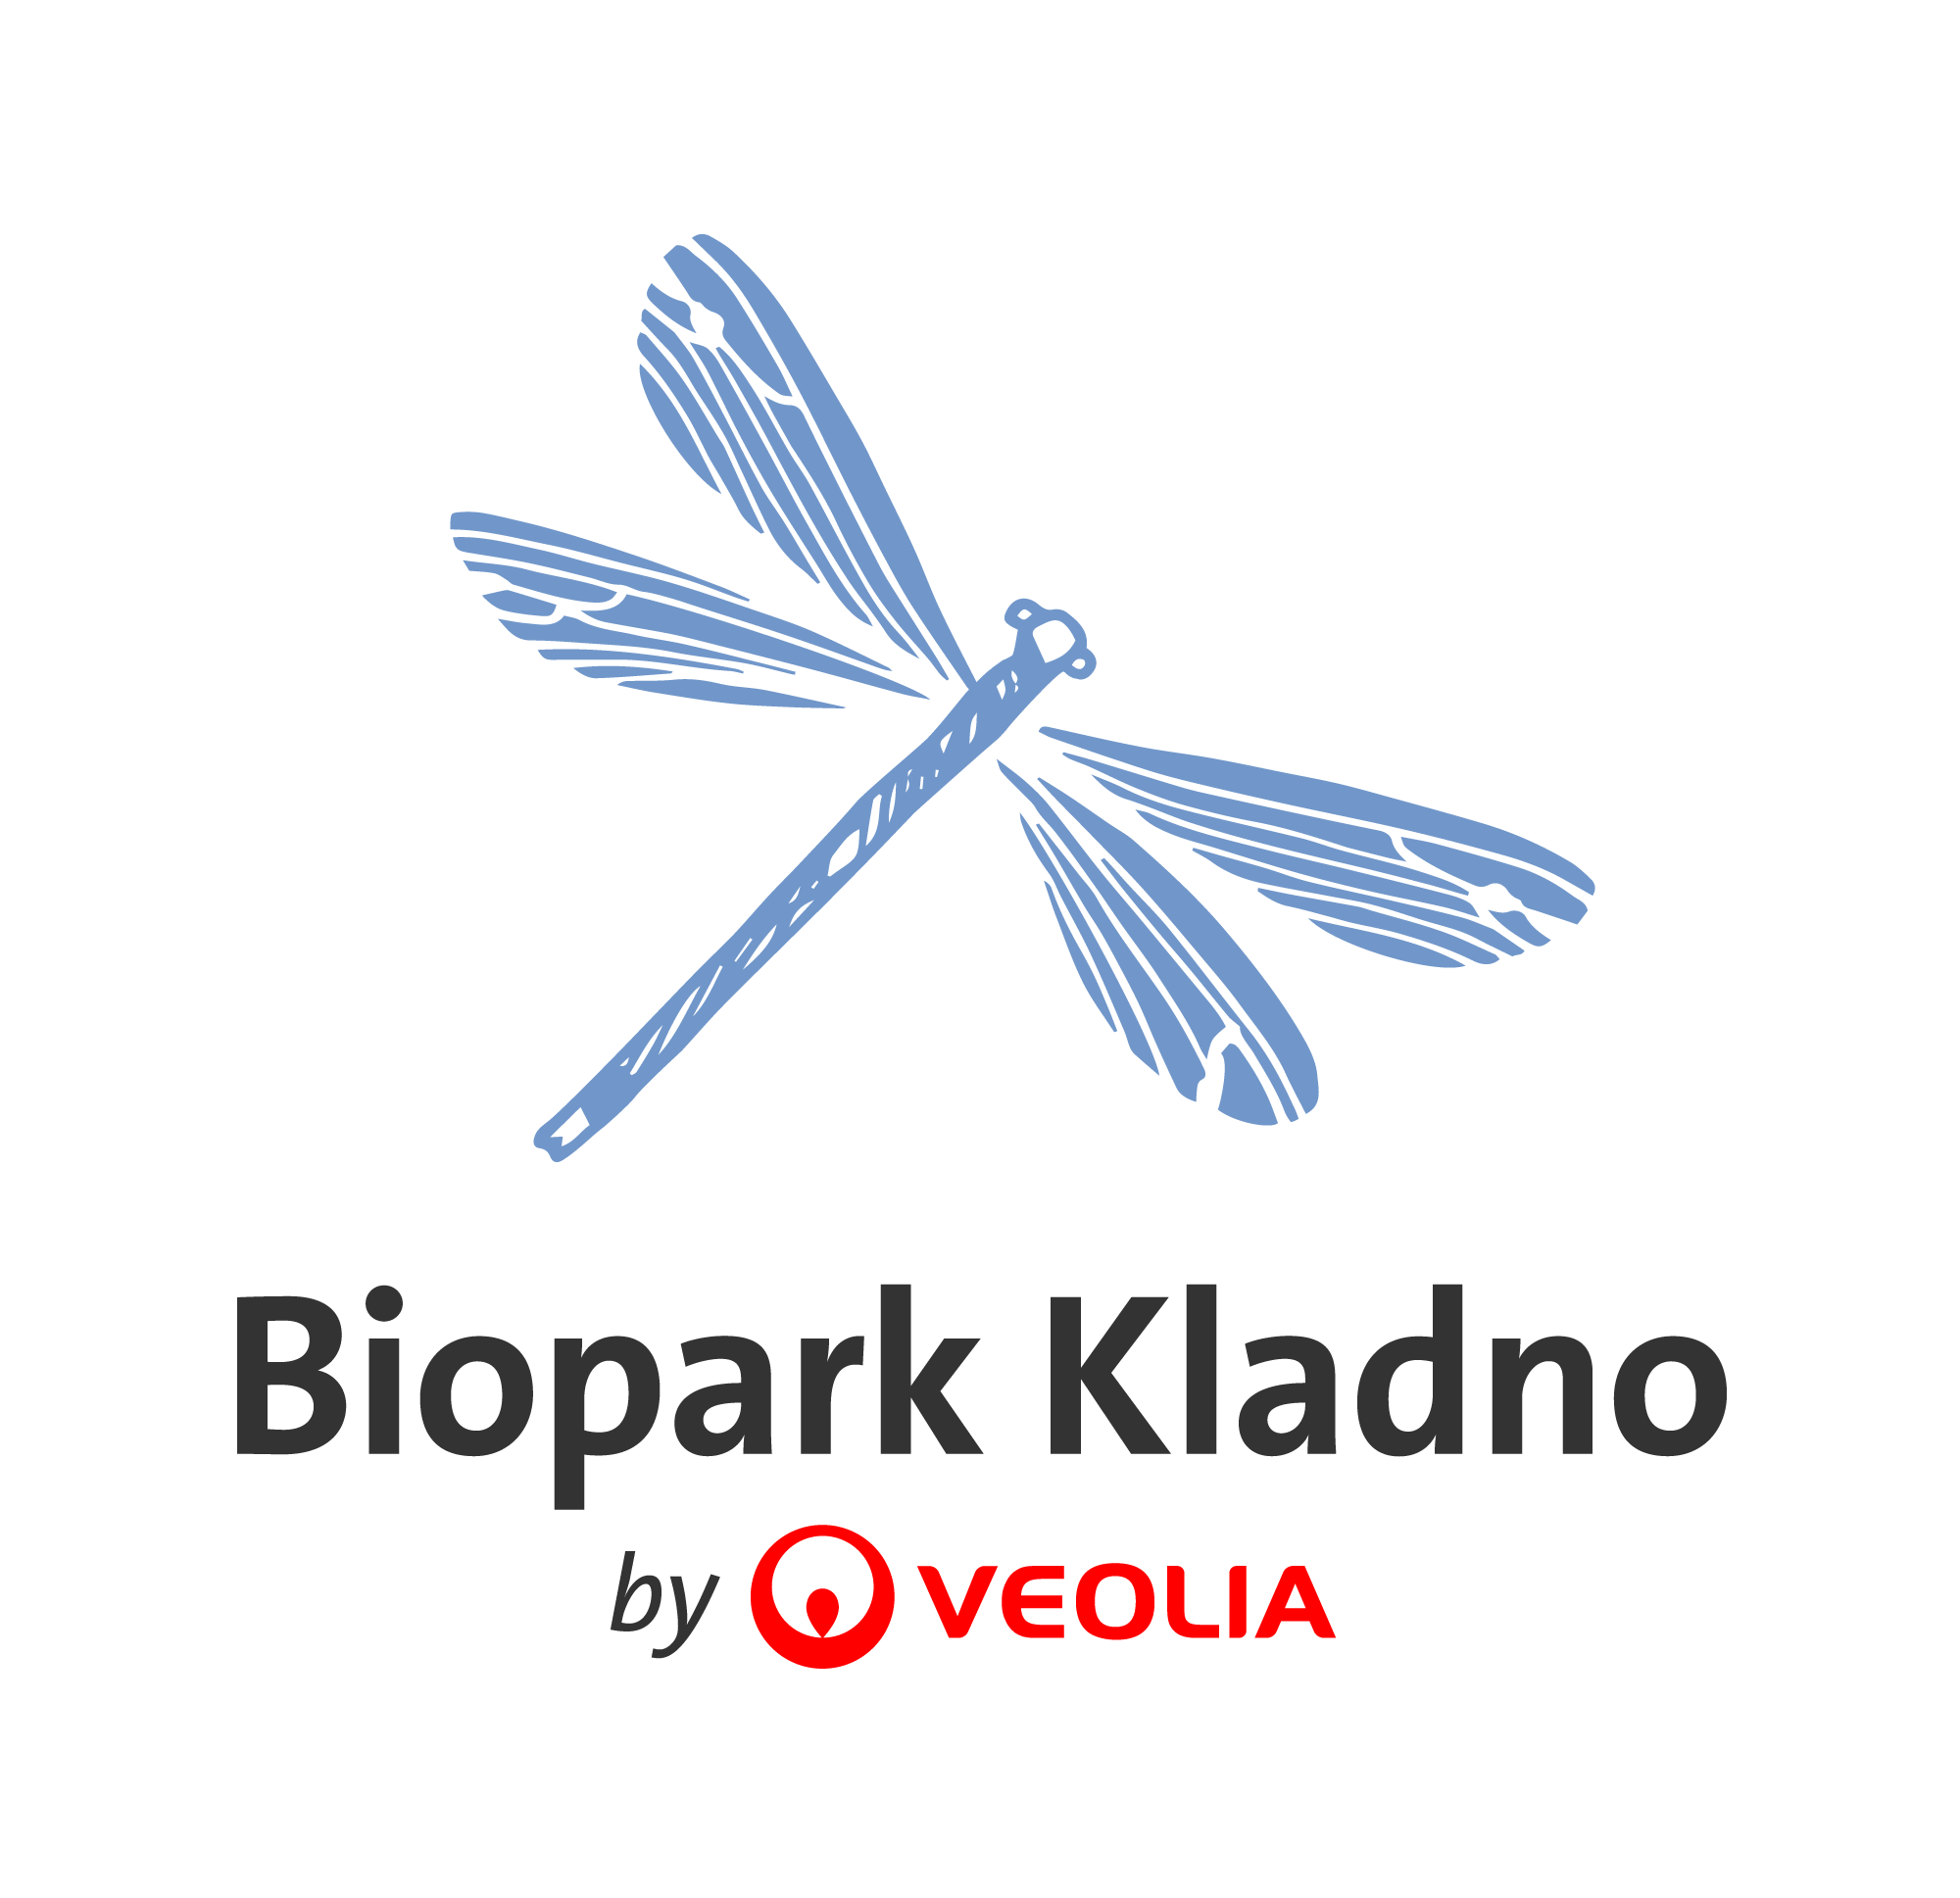 Biopark Kladno by VEOLIA